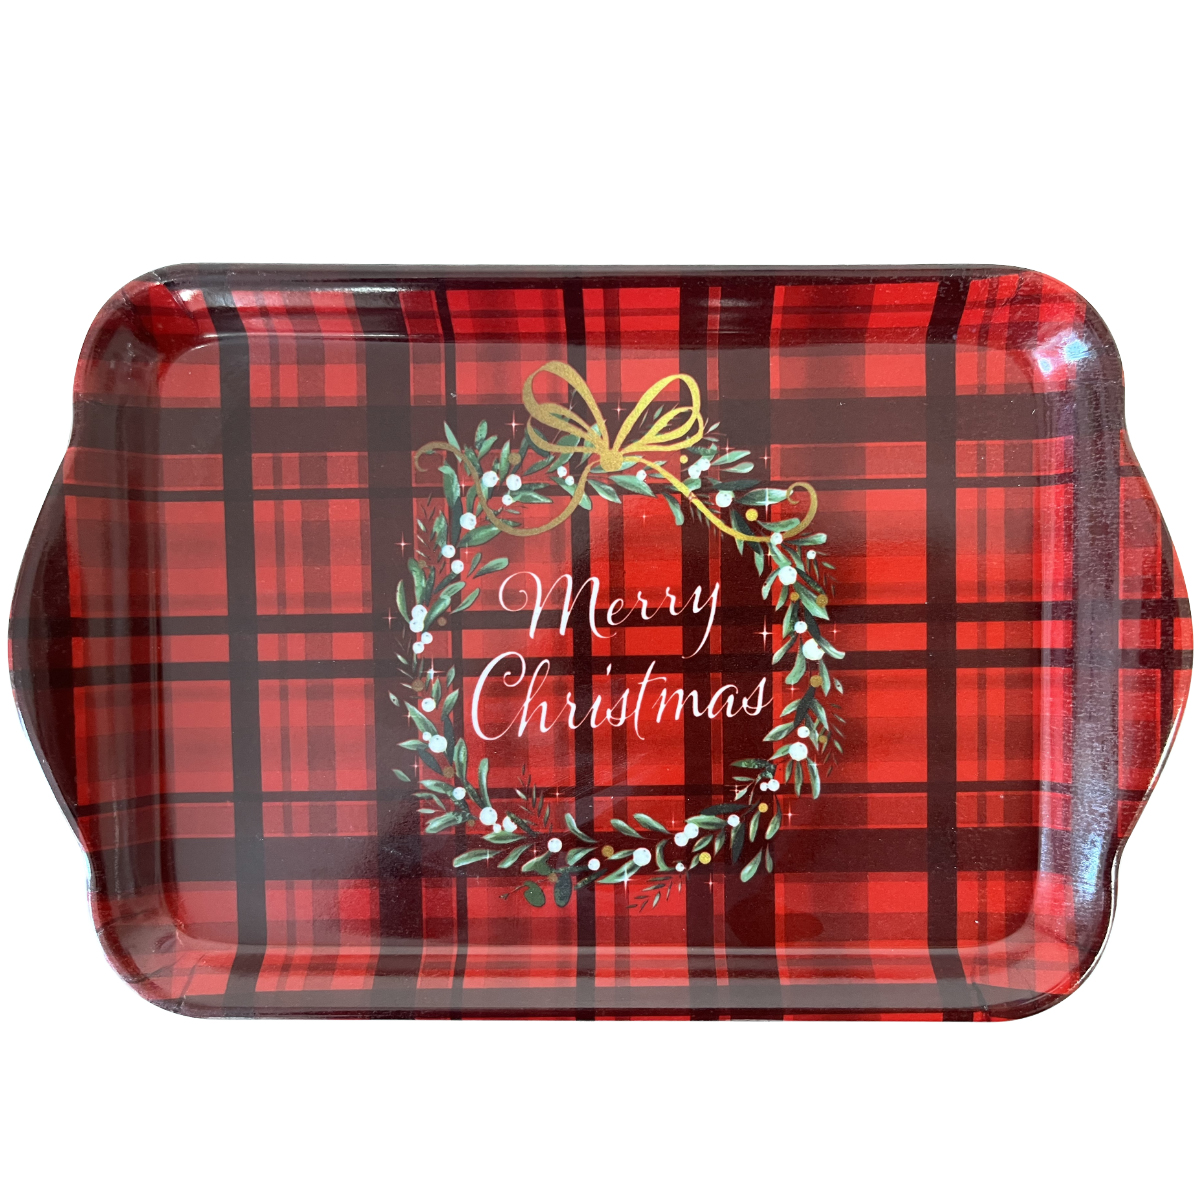 Mini rectangular tray - Christmas Plaid Red